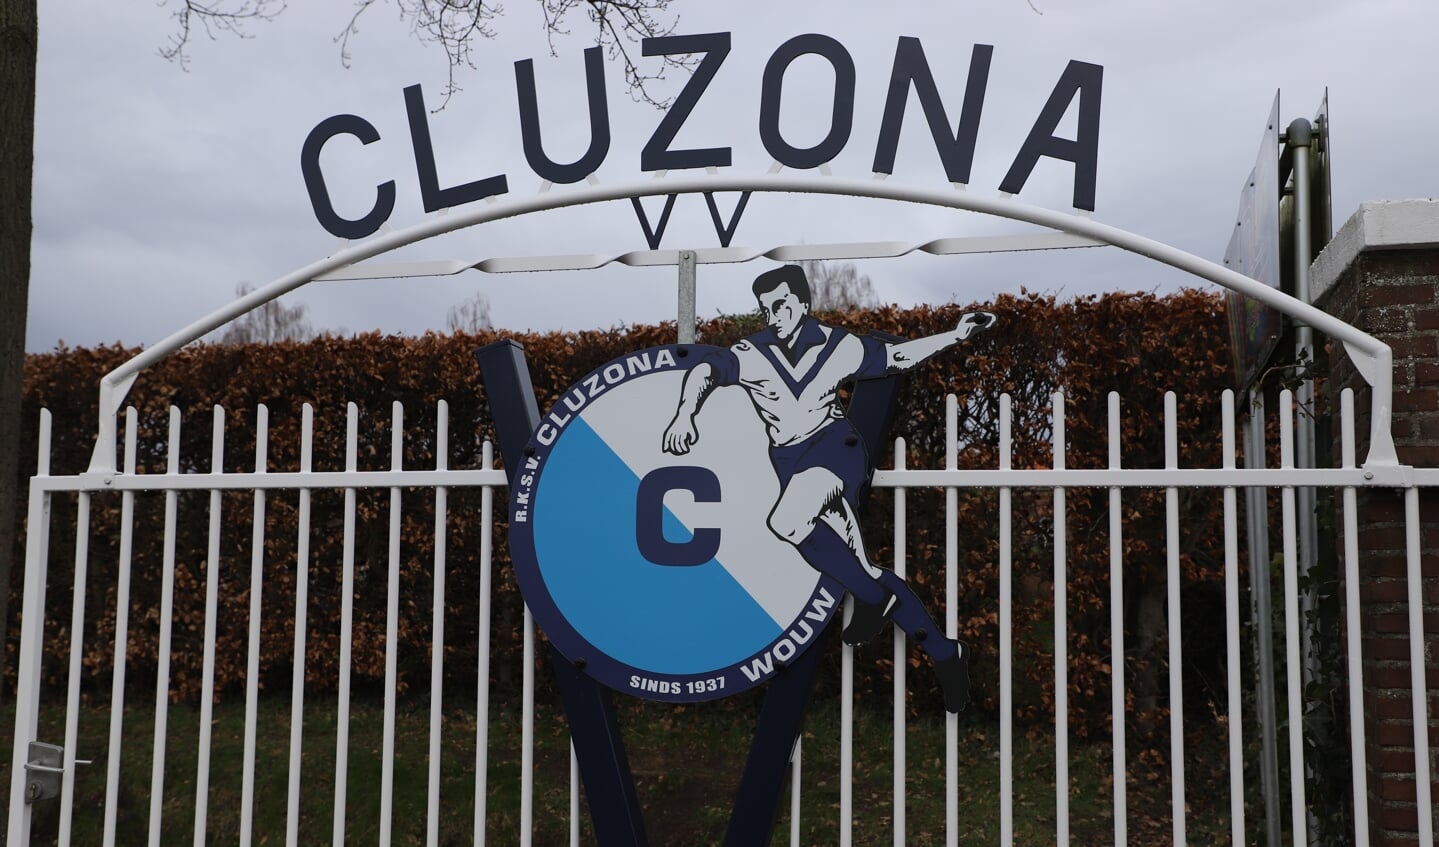 Cluzona